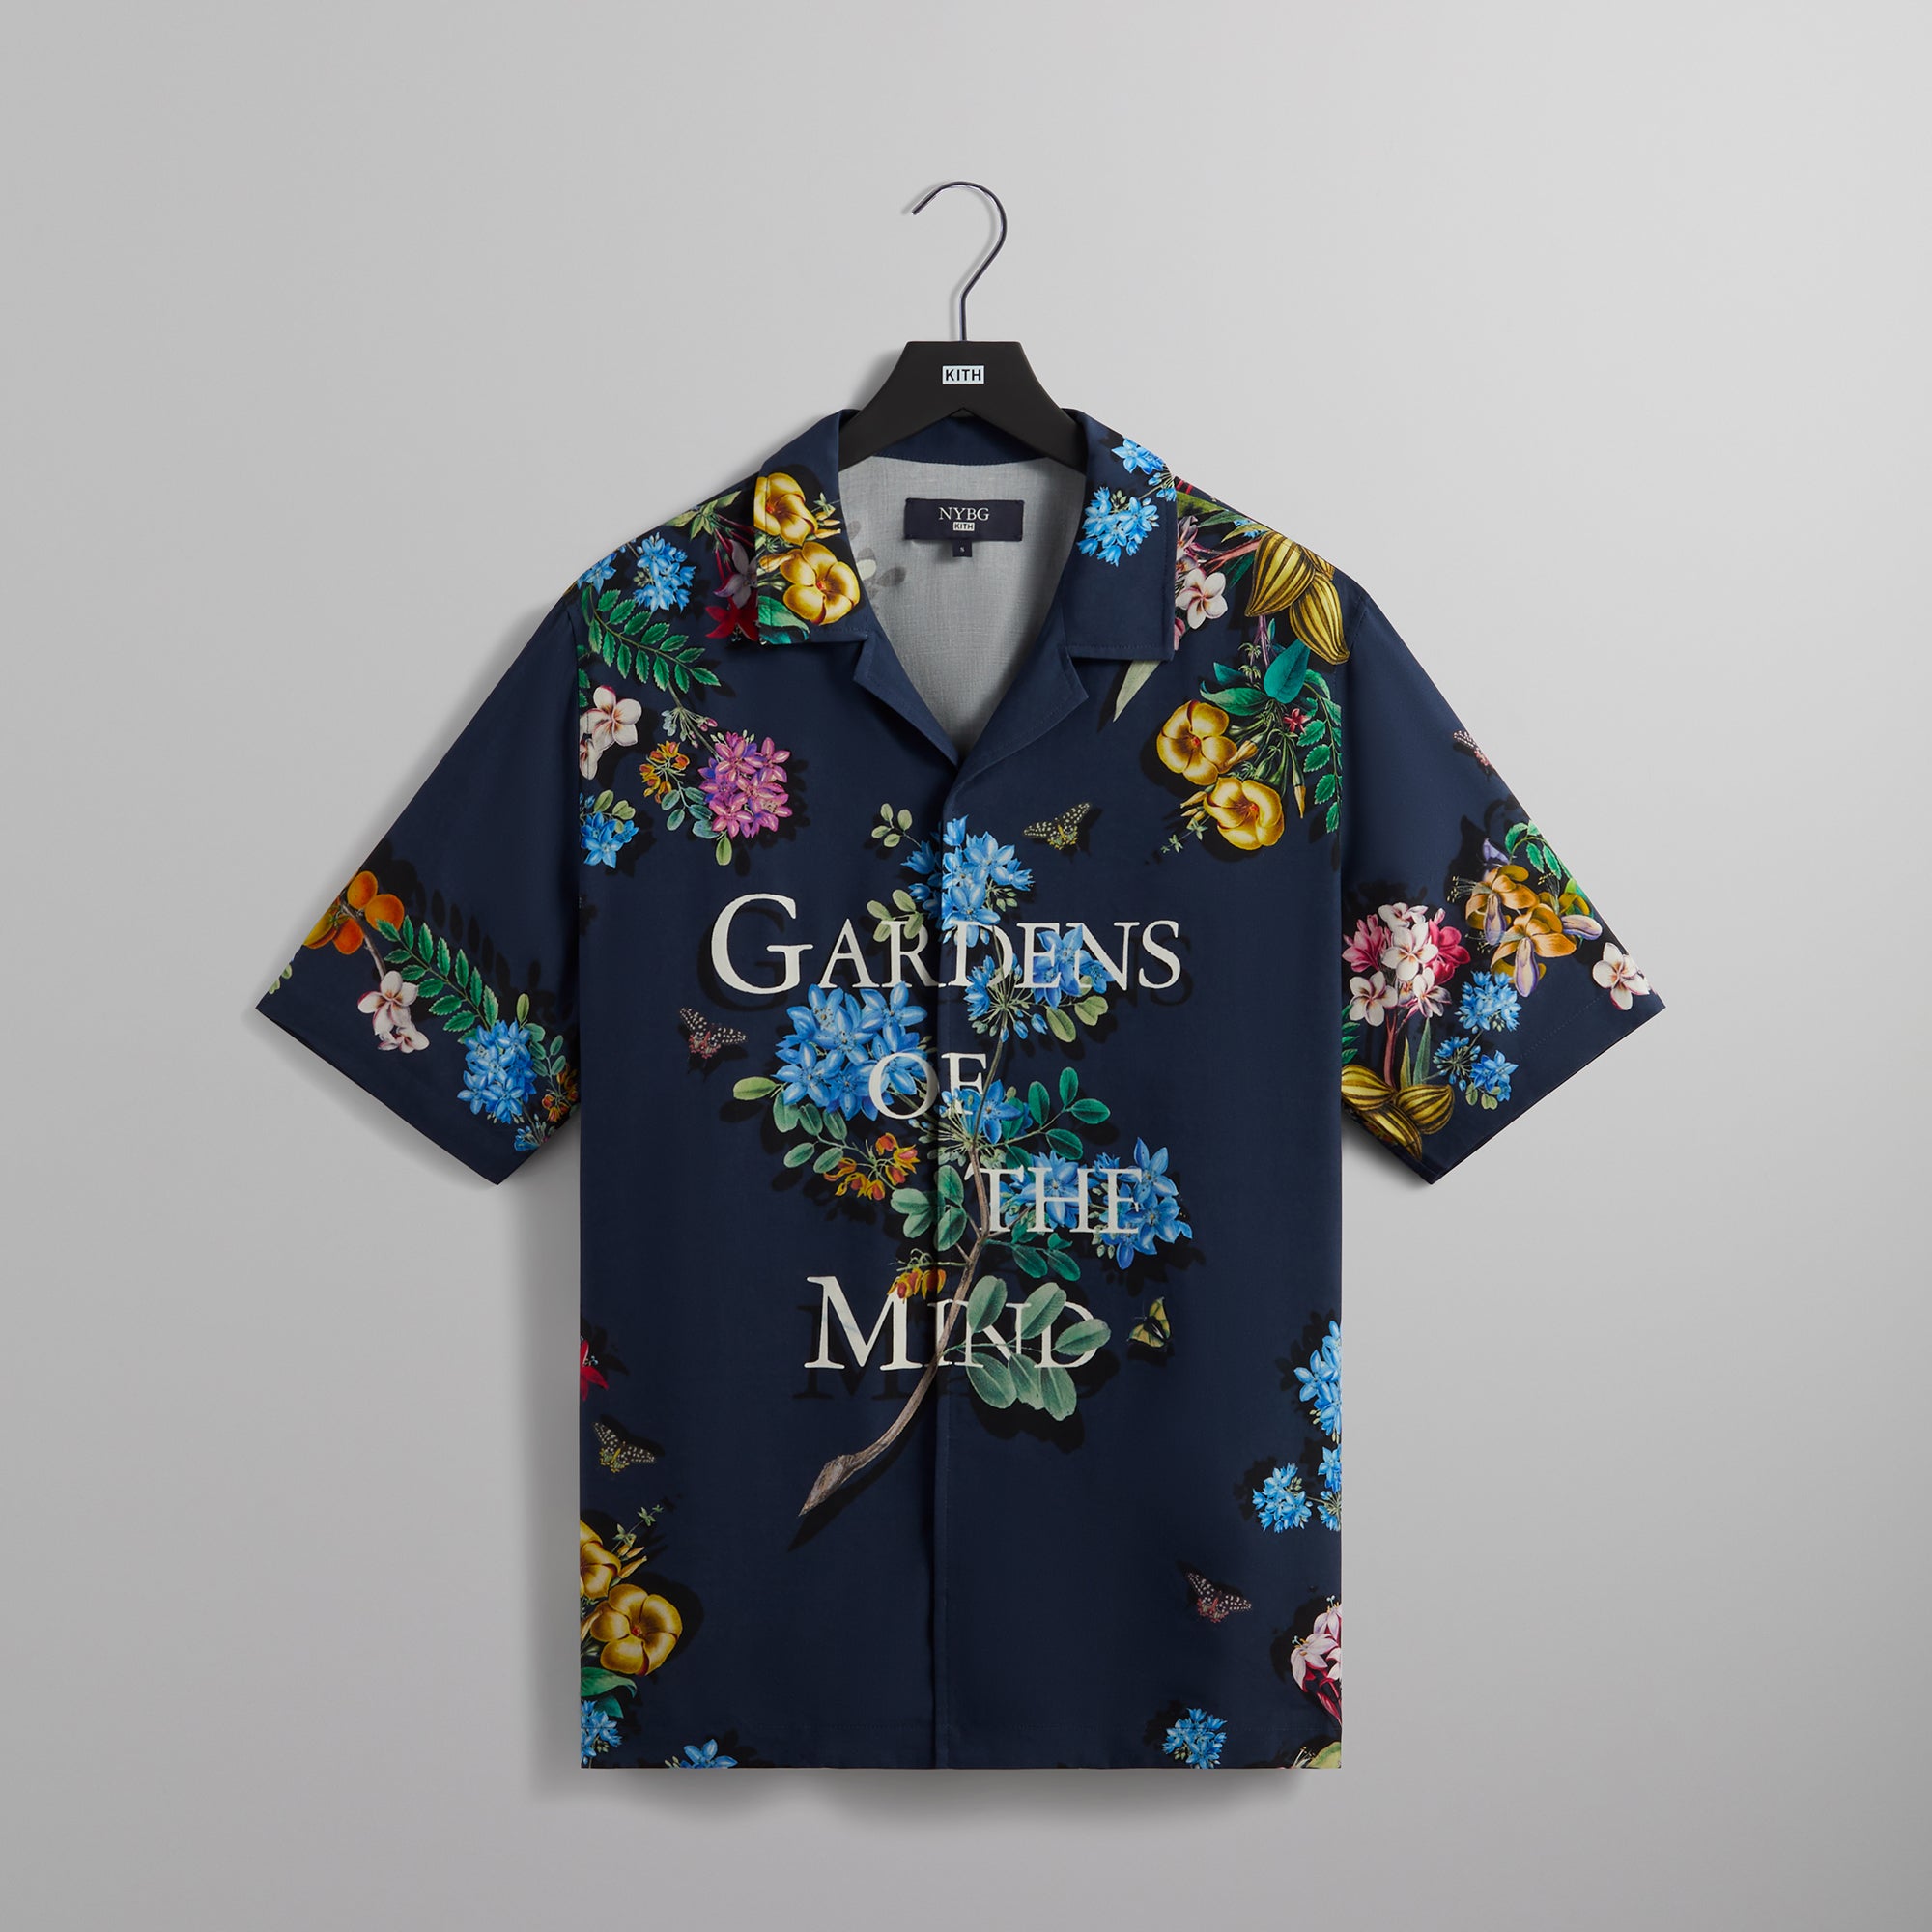 Kith for New York Botanical Gardens Gardens of the Mind Thompson Shirt